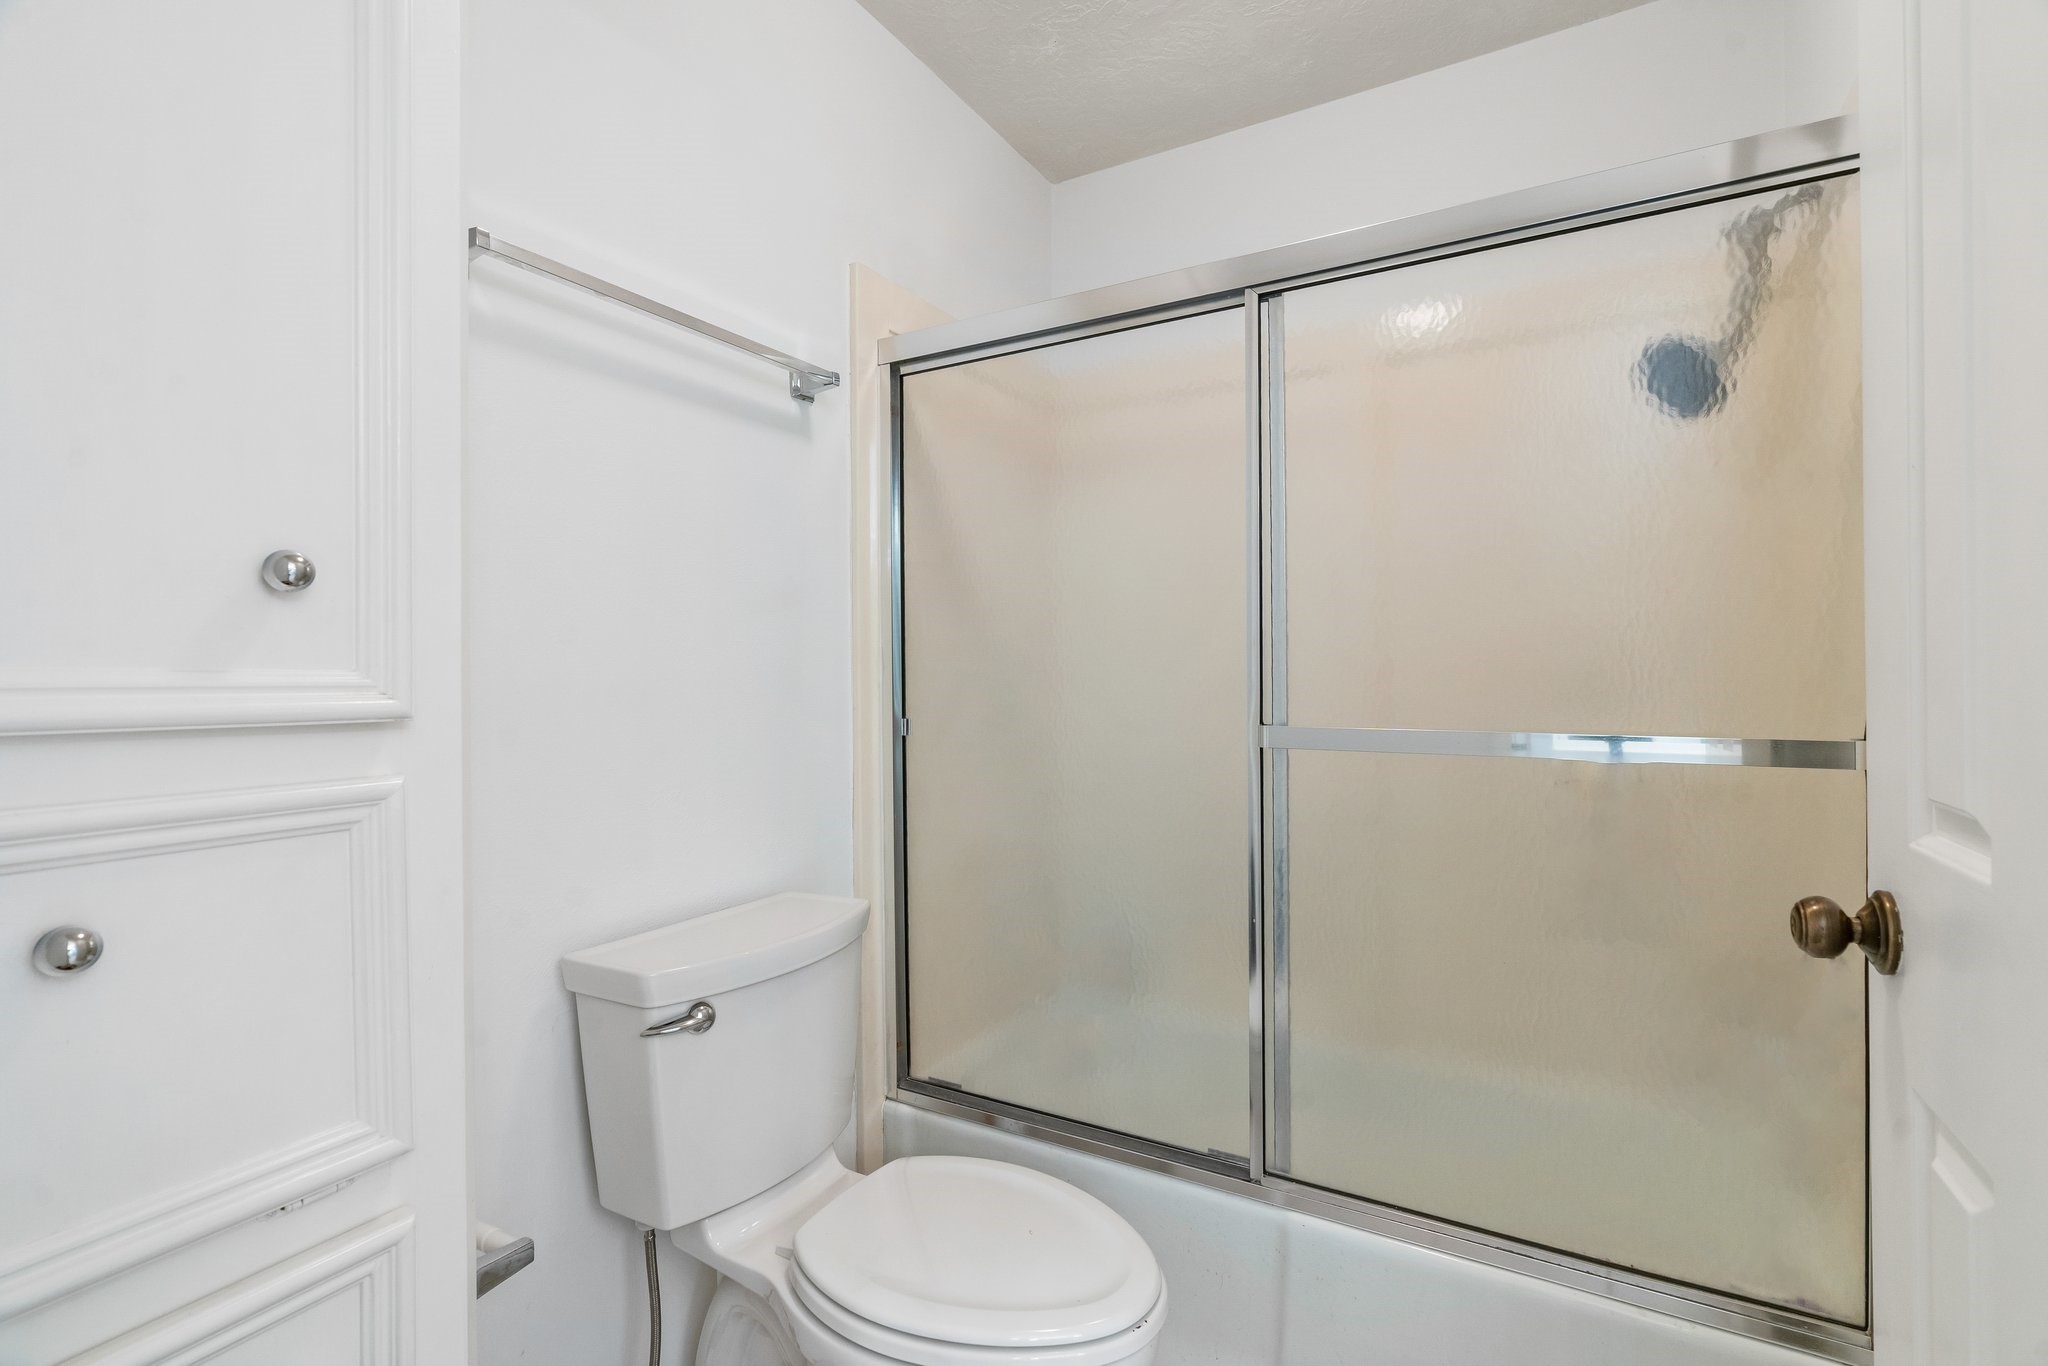 Shared bath glass enclosed tub/shower.